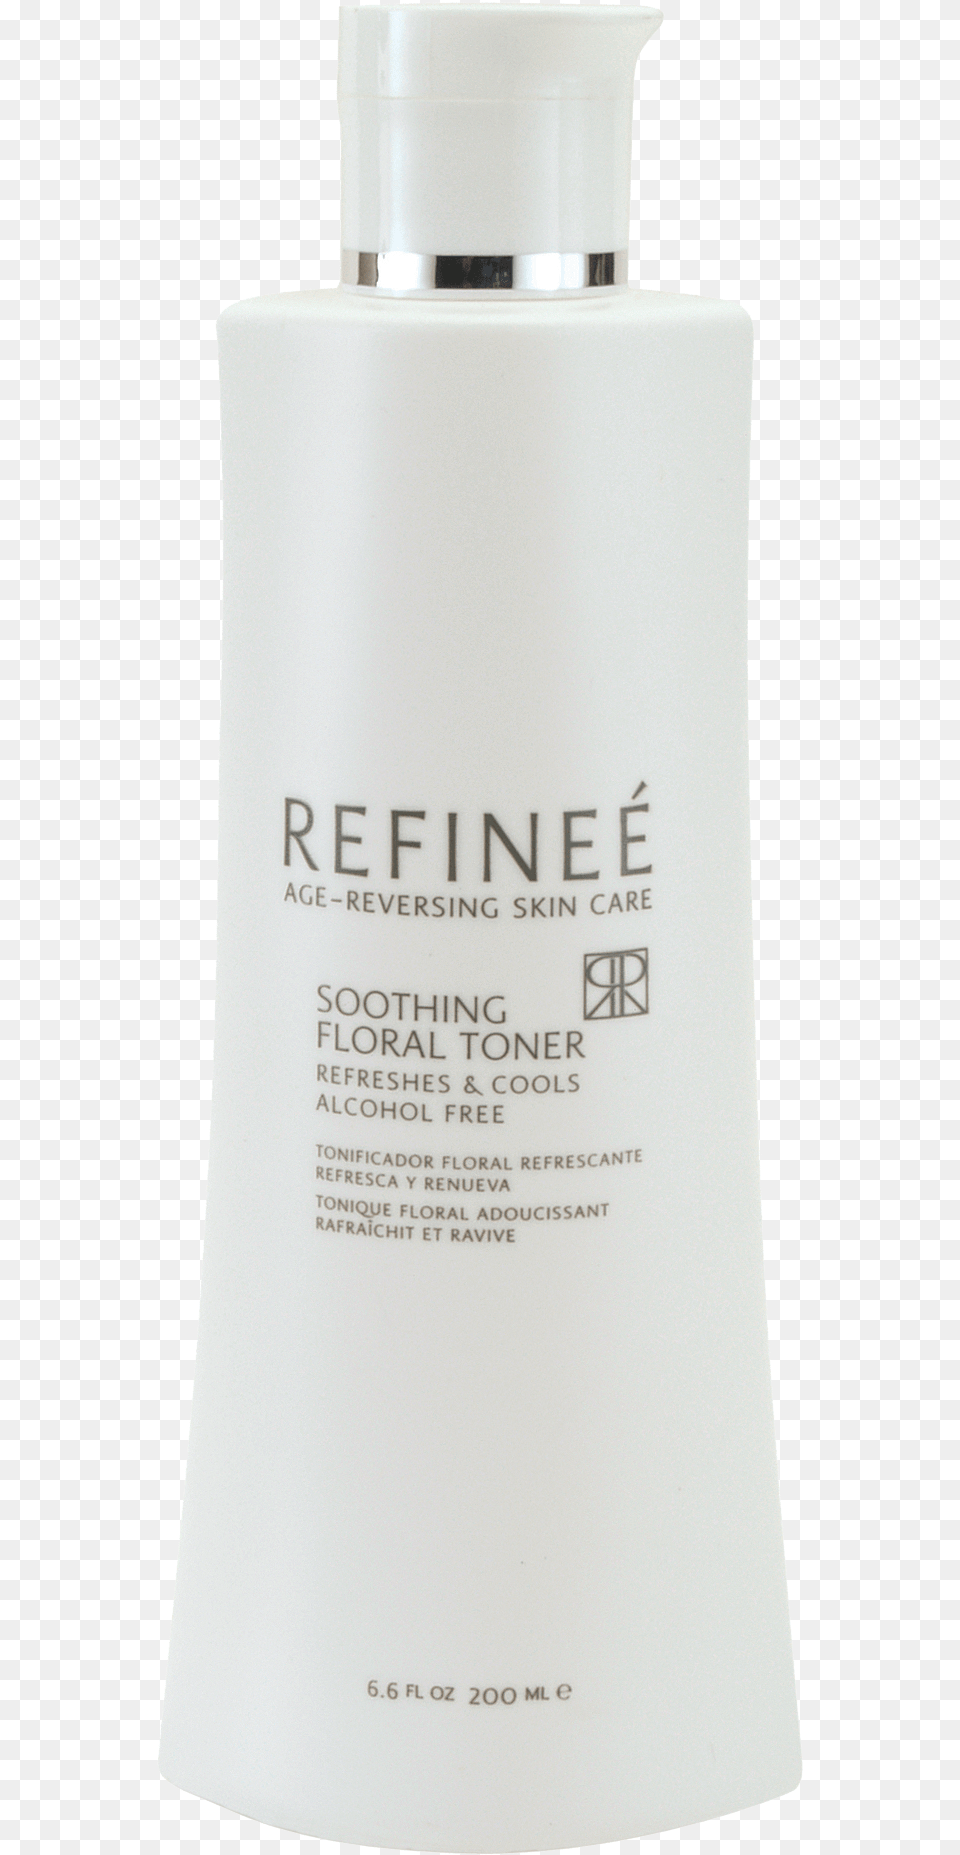 Refinee Soosthing Floral Toner, Bottle, Lotion, Shaker Png Image